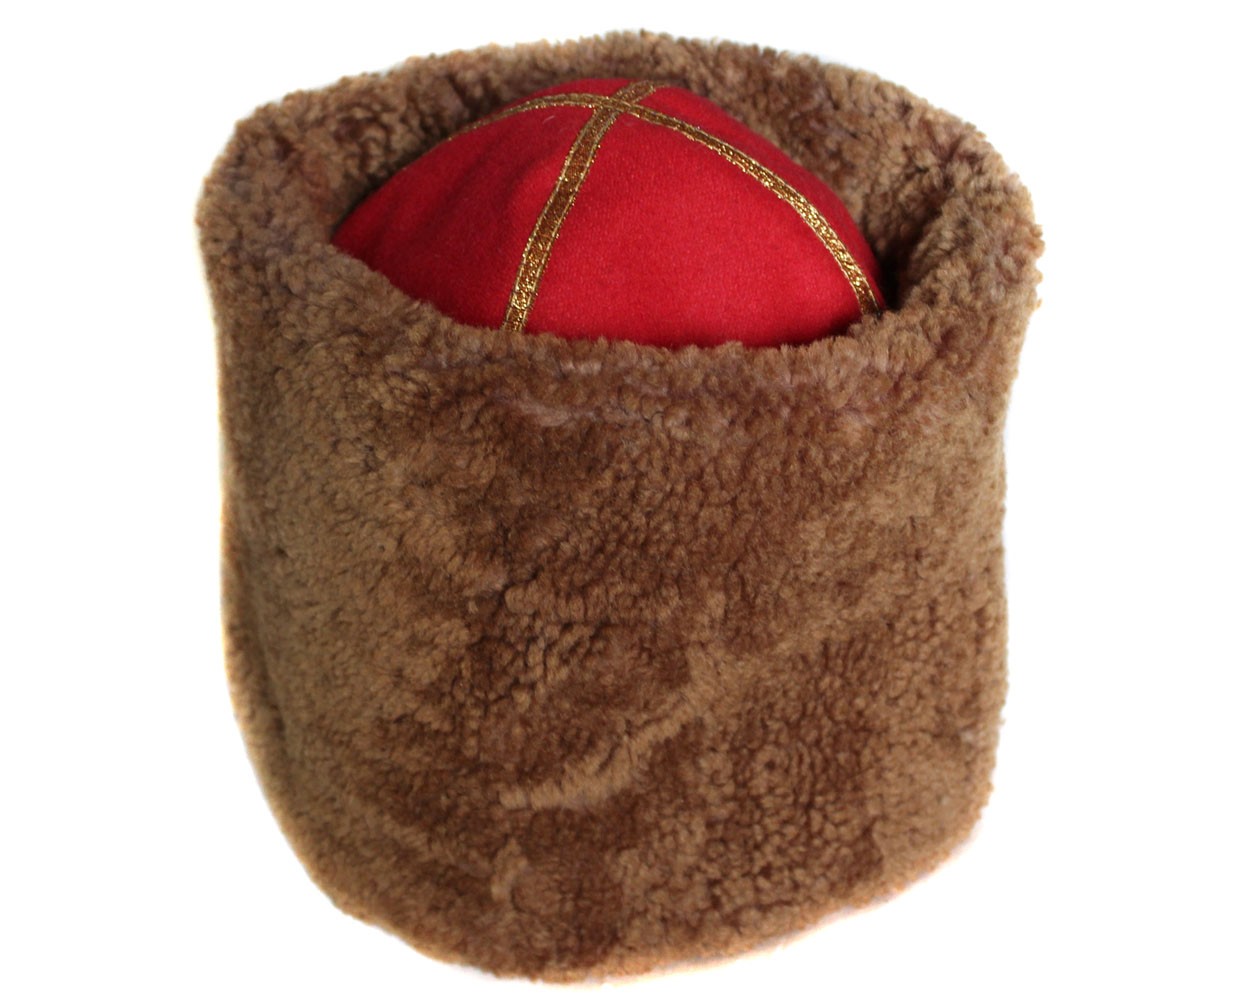 Cossack fur hat papaha papakha winter hat warm russian caucasus